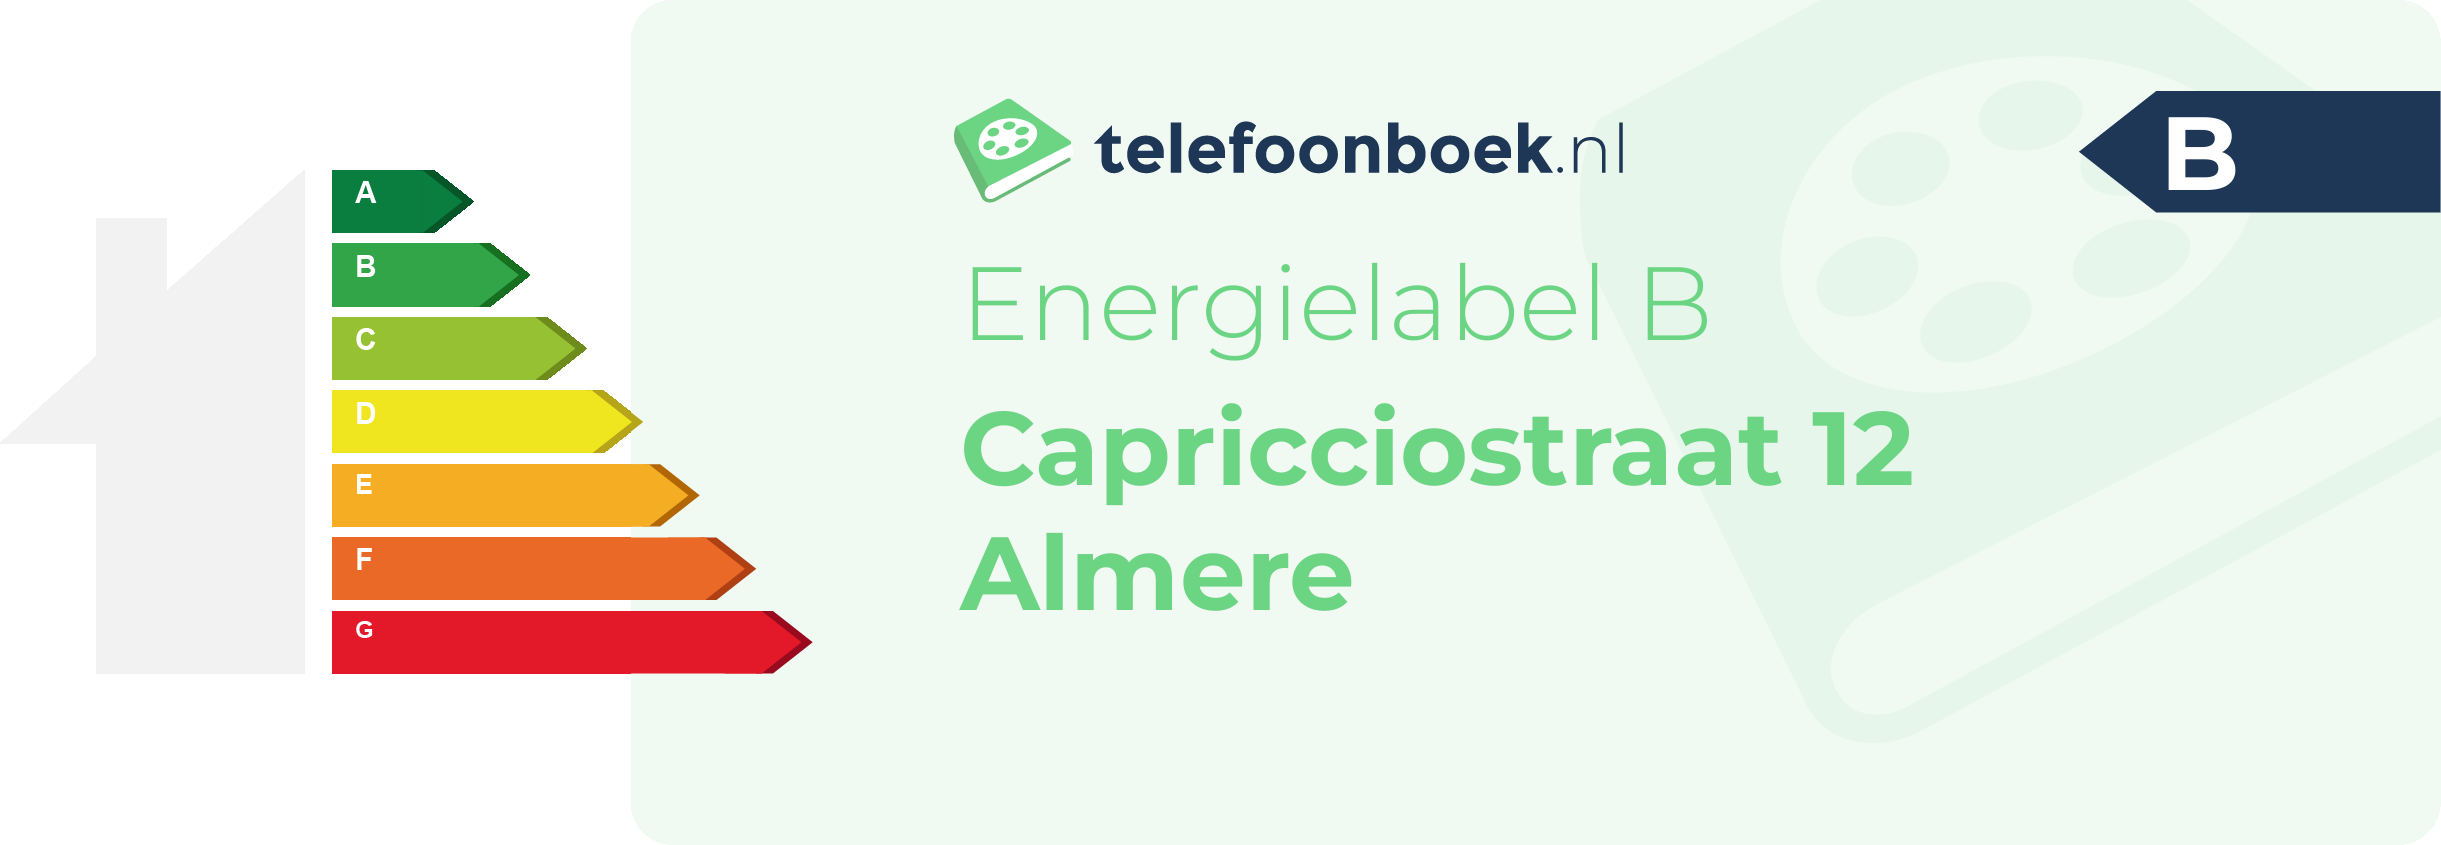 Energielabel Capricciostraat 12 Almere